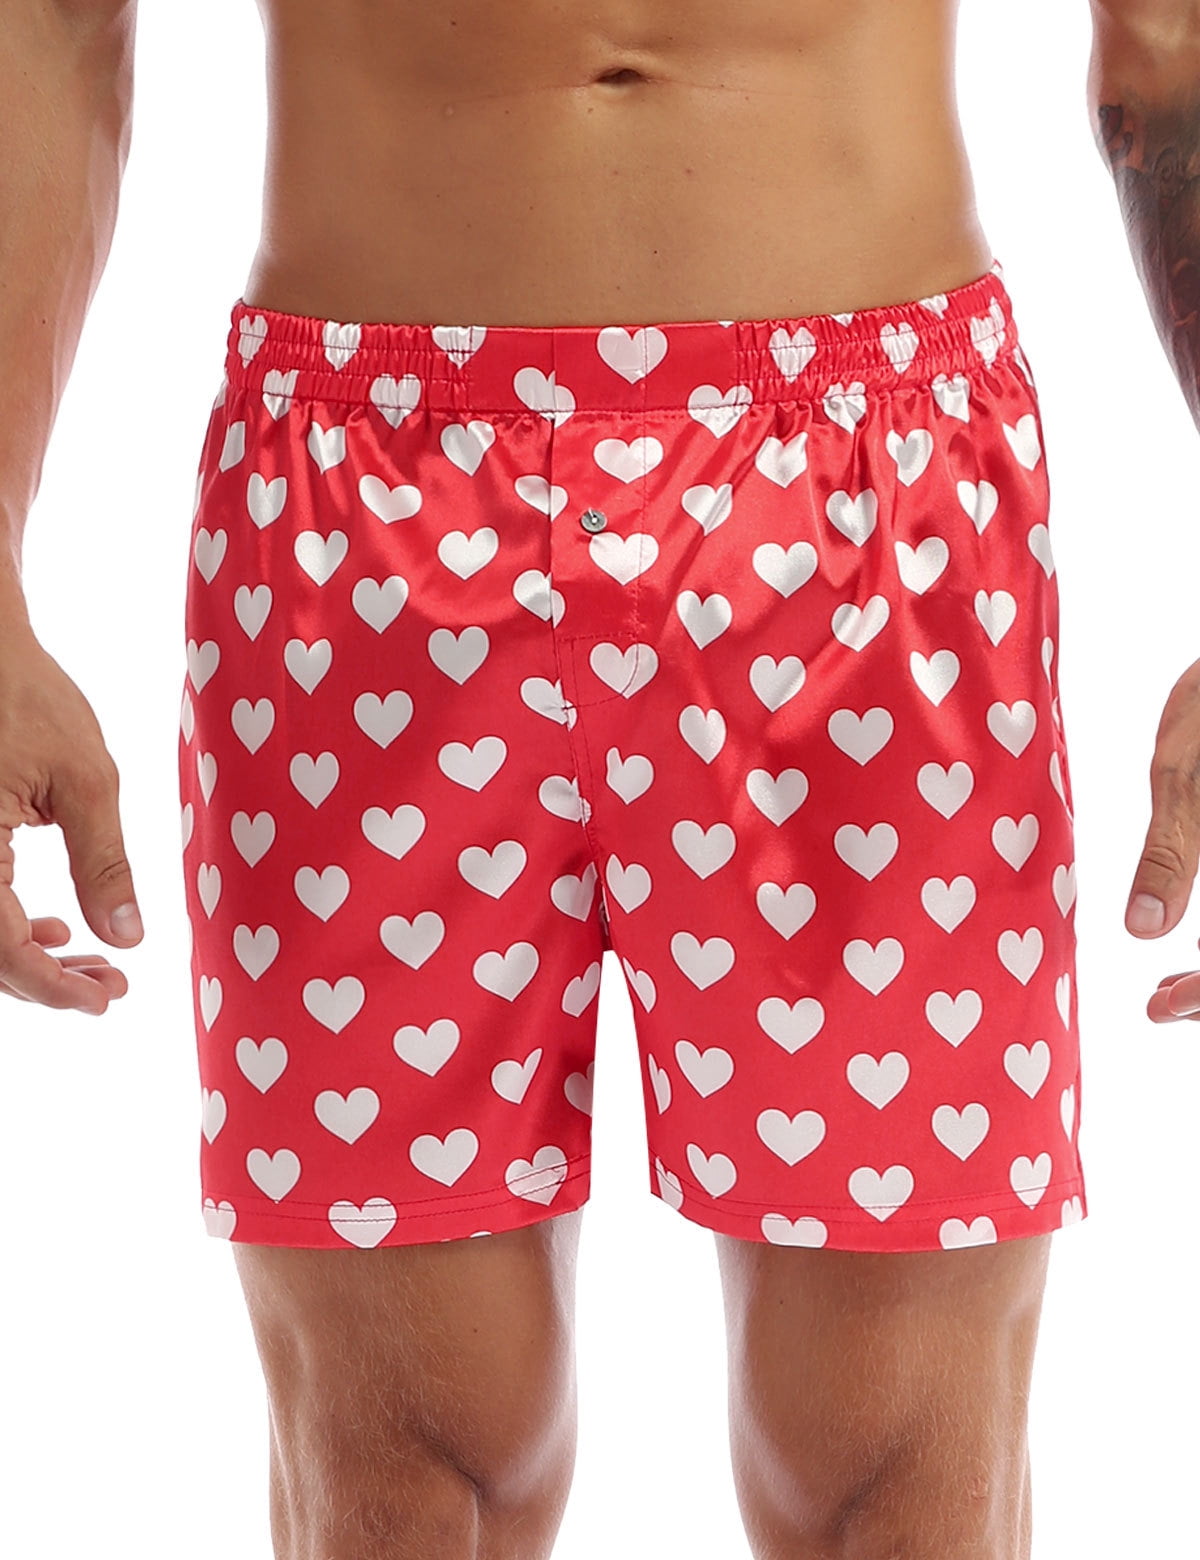 inhzoy Men's Love Heart Lip Print Silk Satin Boxers Shorts Lounge ...